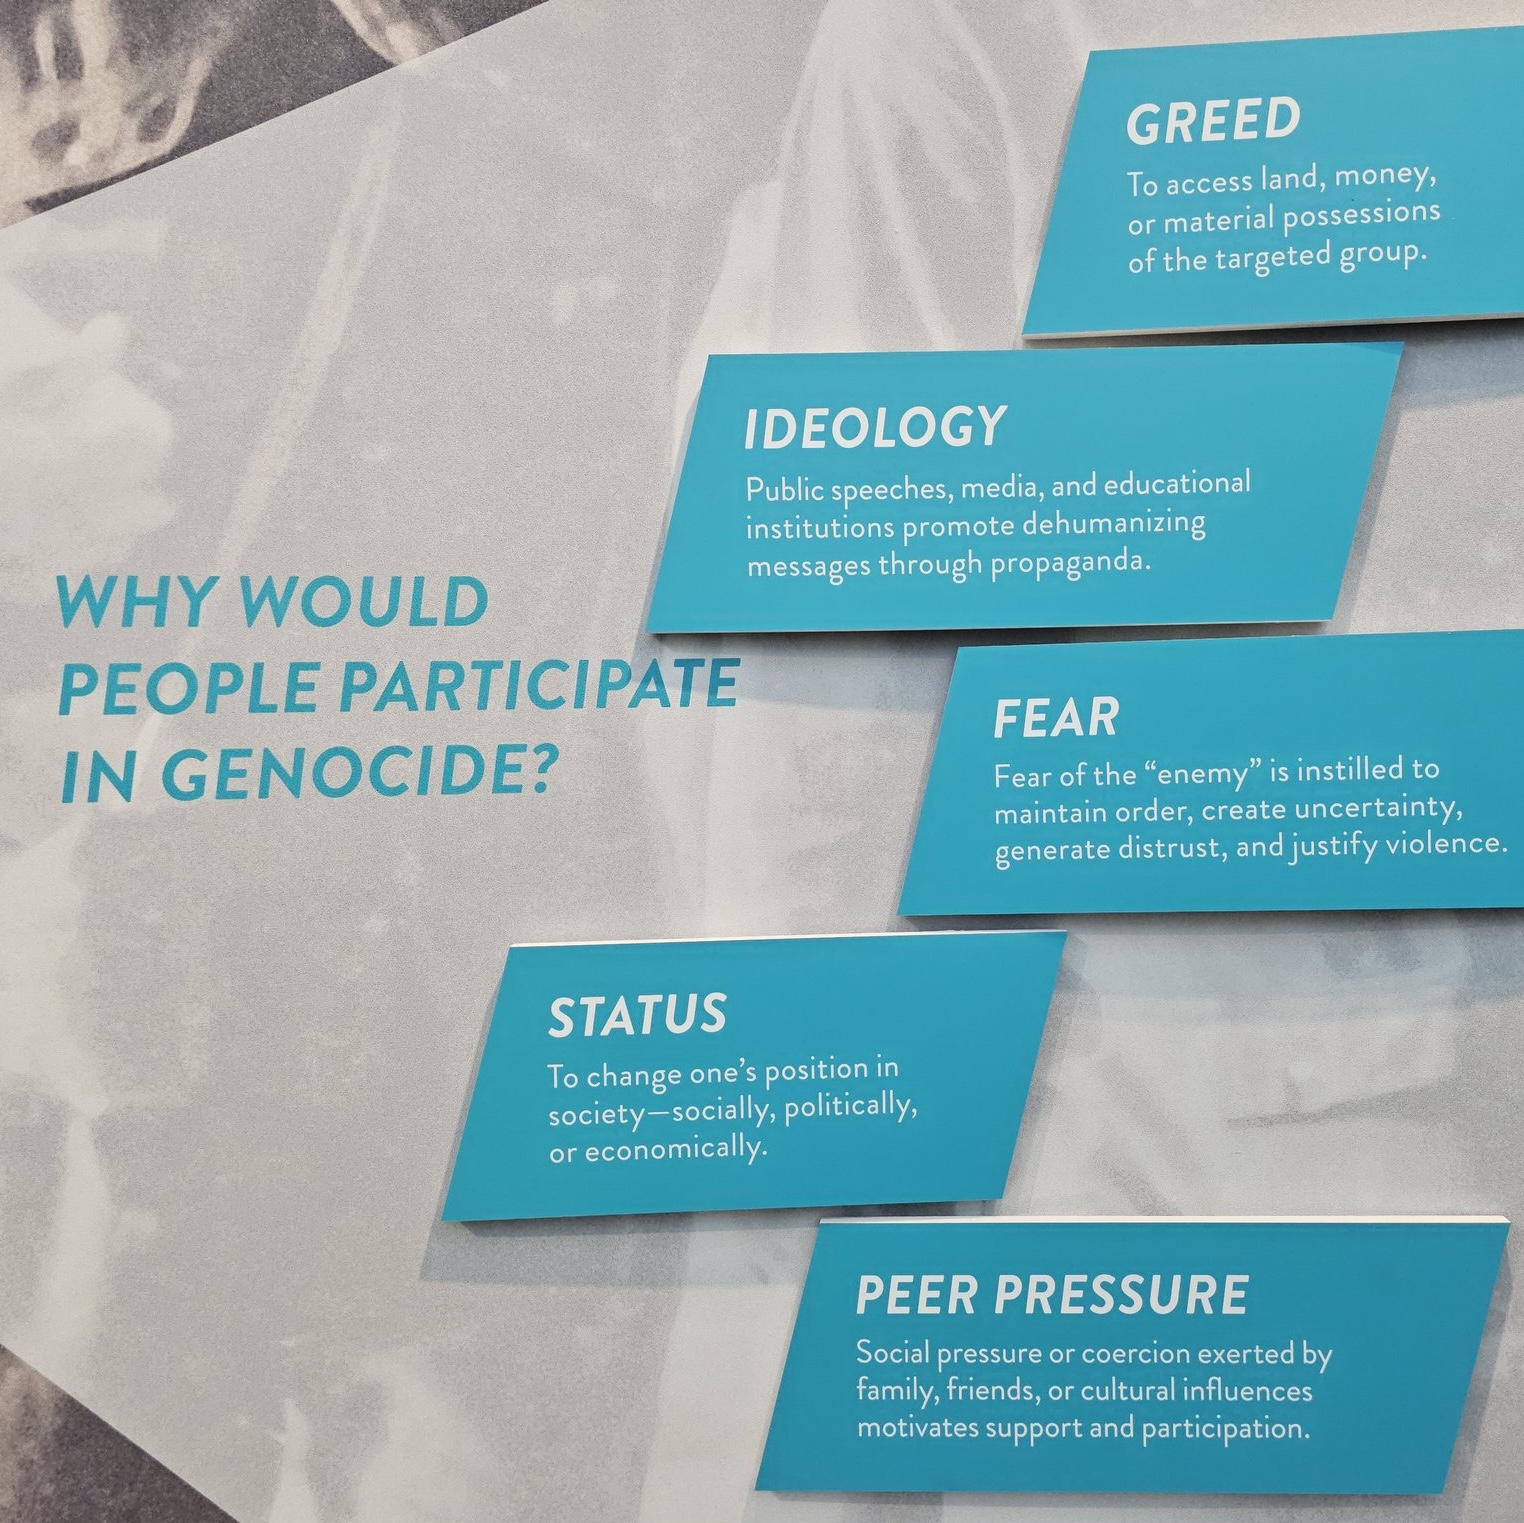 New exhibit in Skokie explores warning signs of genocide